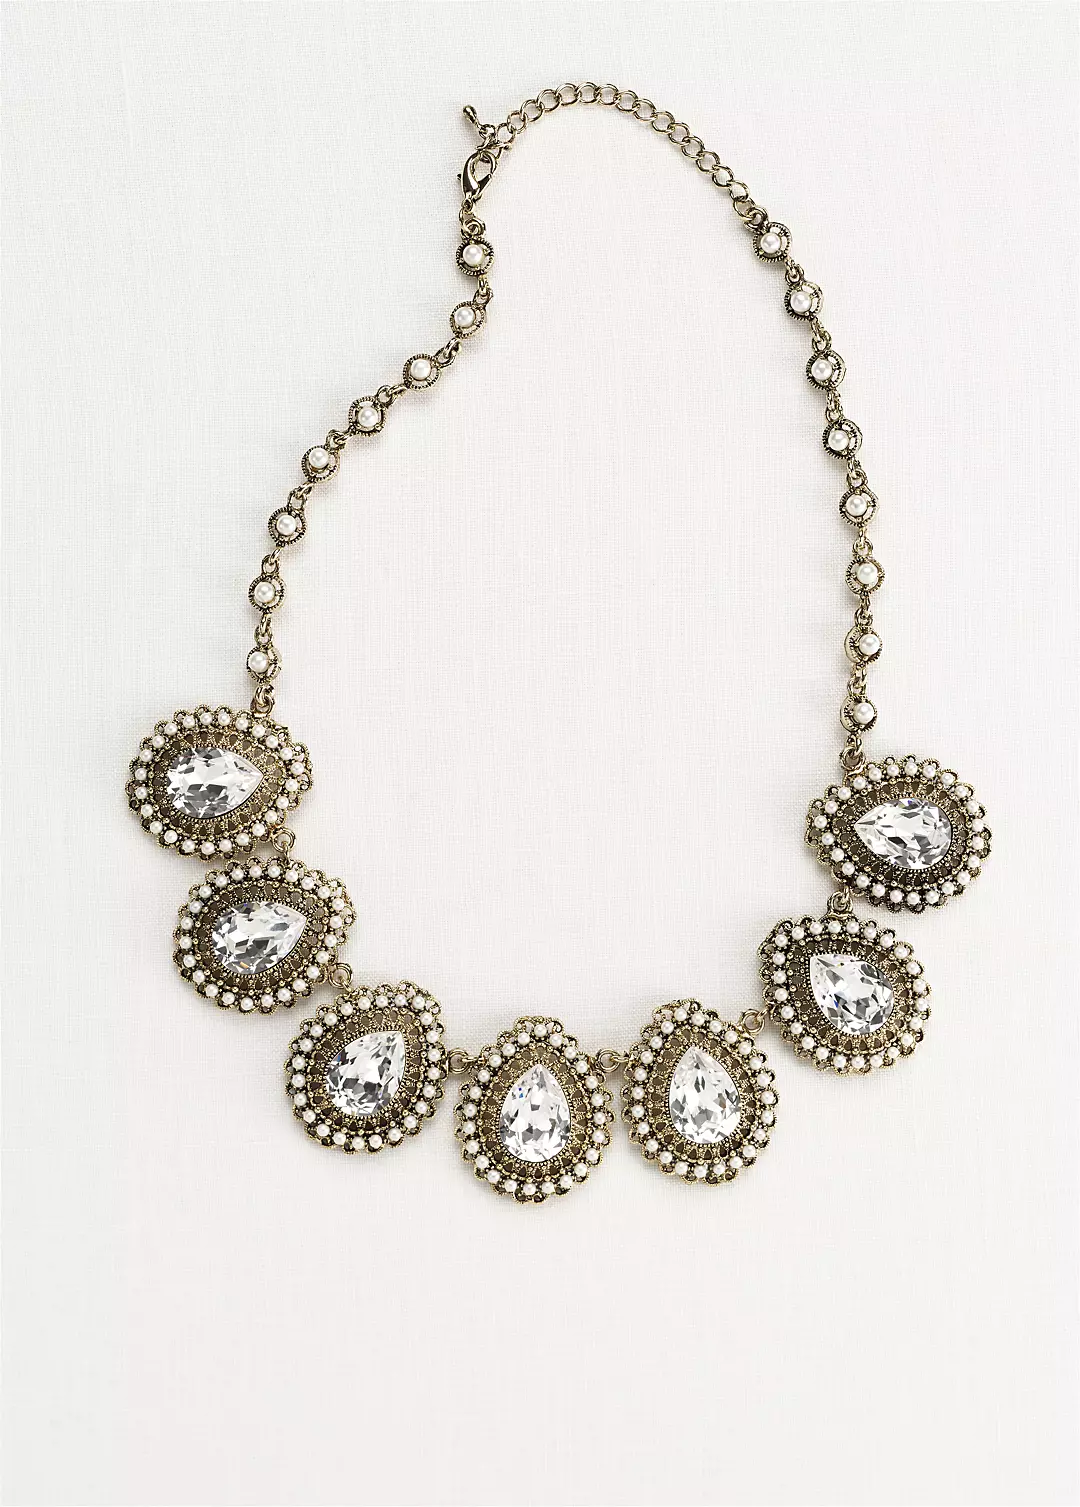 Baroque Teardrop Crystal and Pearl Necklace Image 2